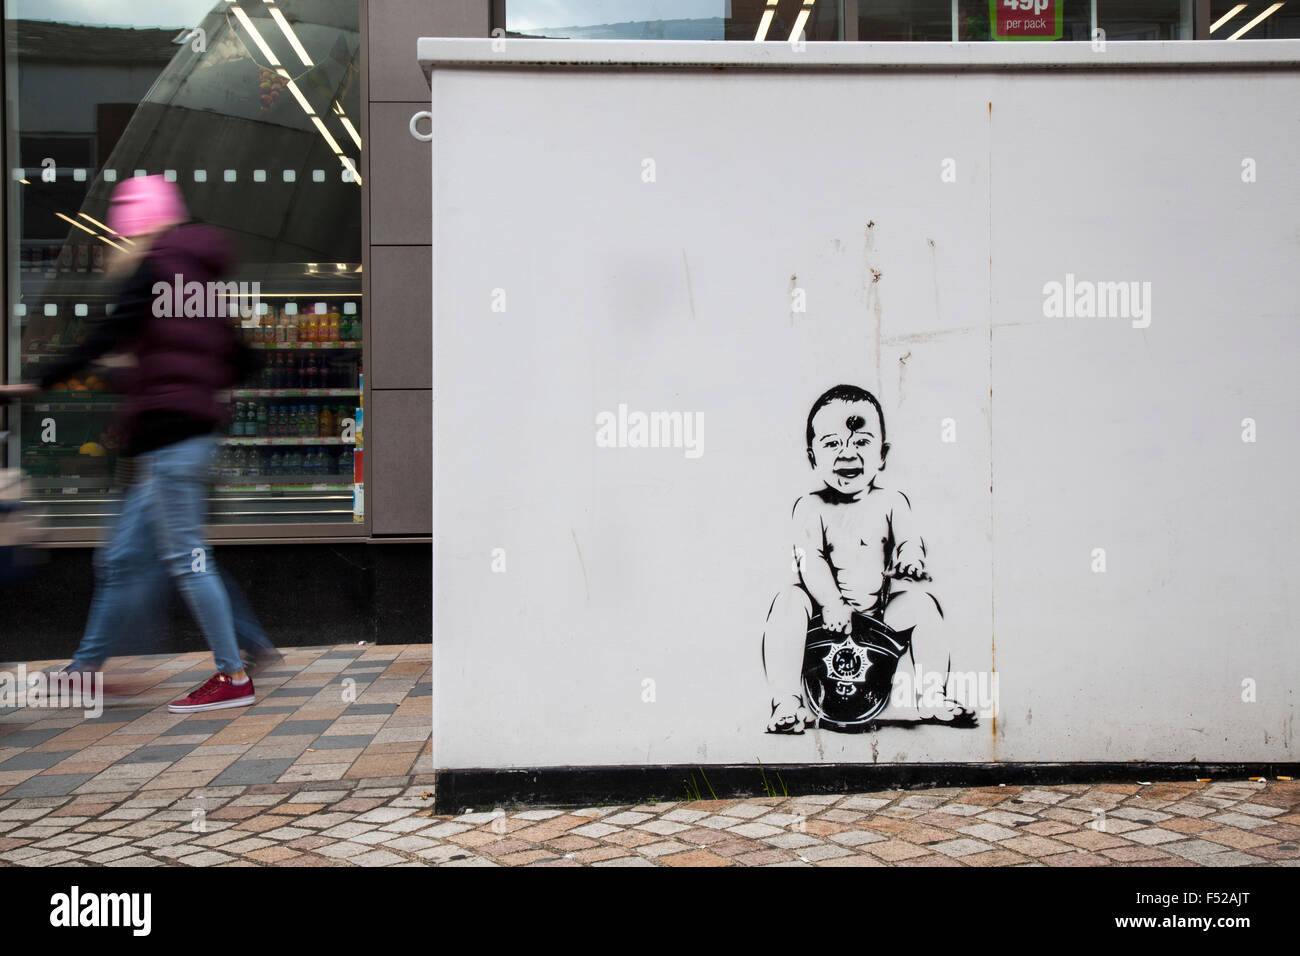 Pedestrian walking past street art, graffiti wall painting, decoration. Baby sitting on Policeman's Helmet; Banksy style artwork in Birley street, UK Stock Photo